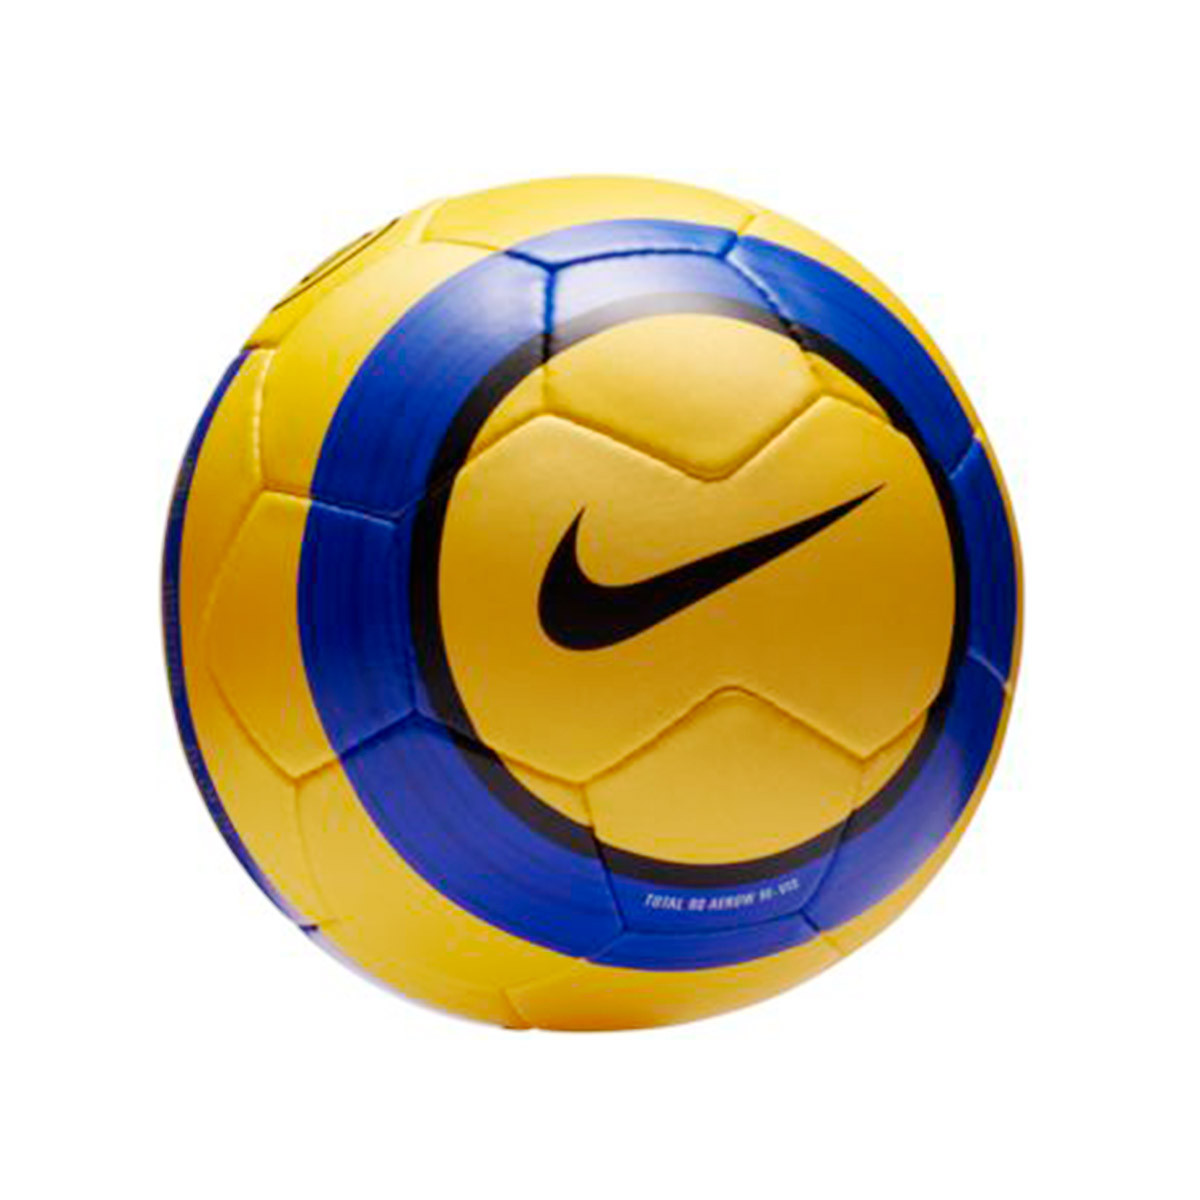 t90 soccer ball